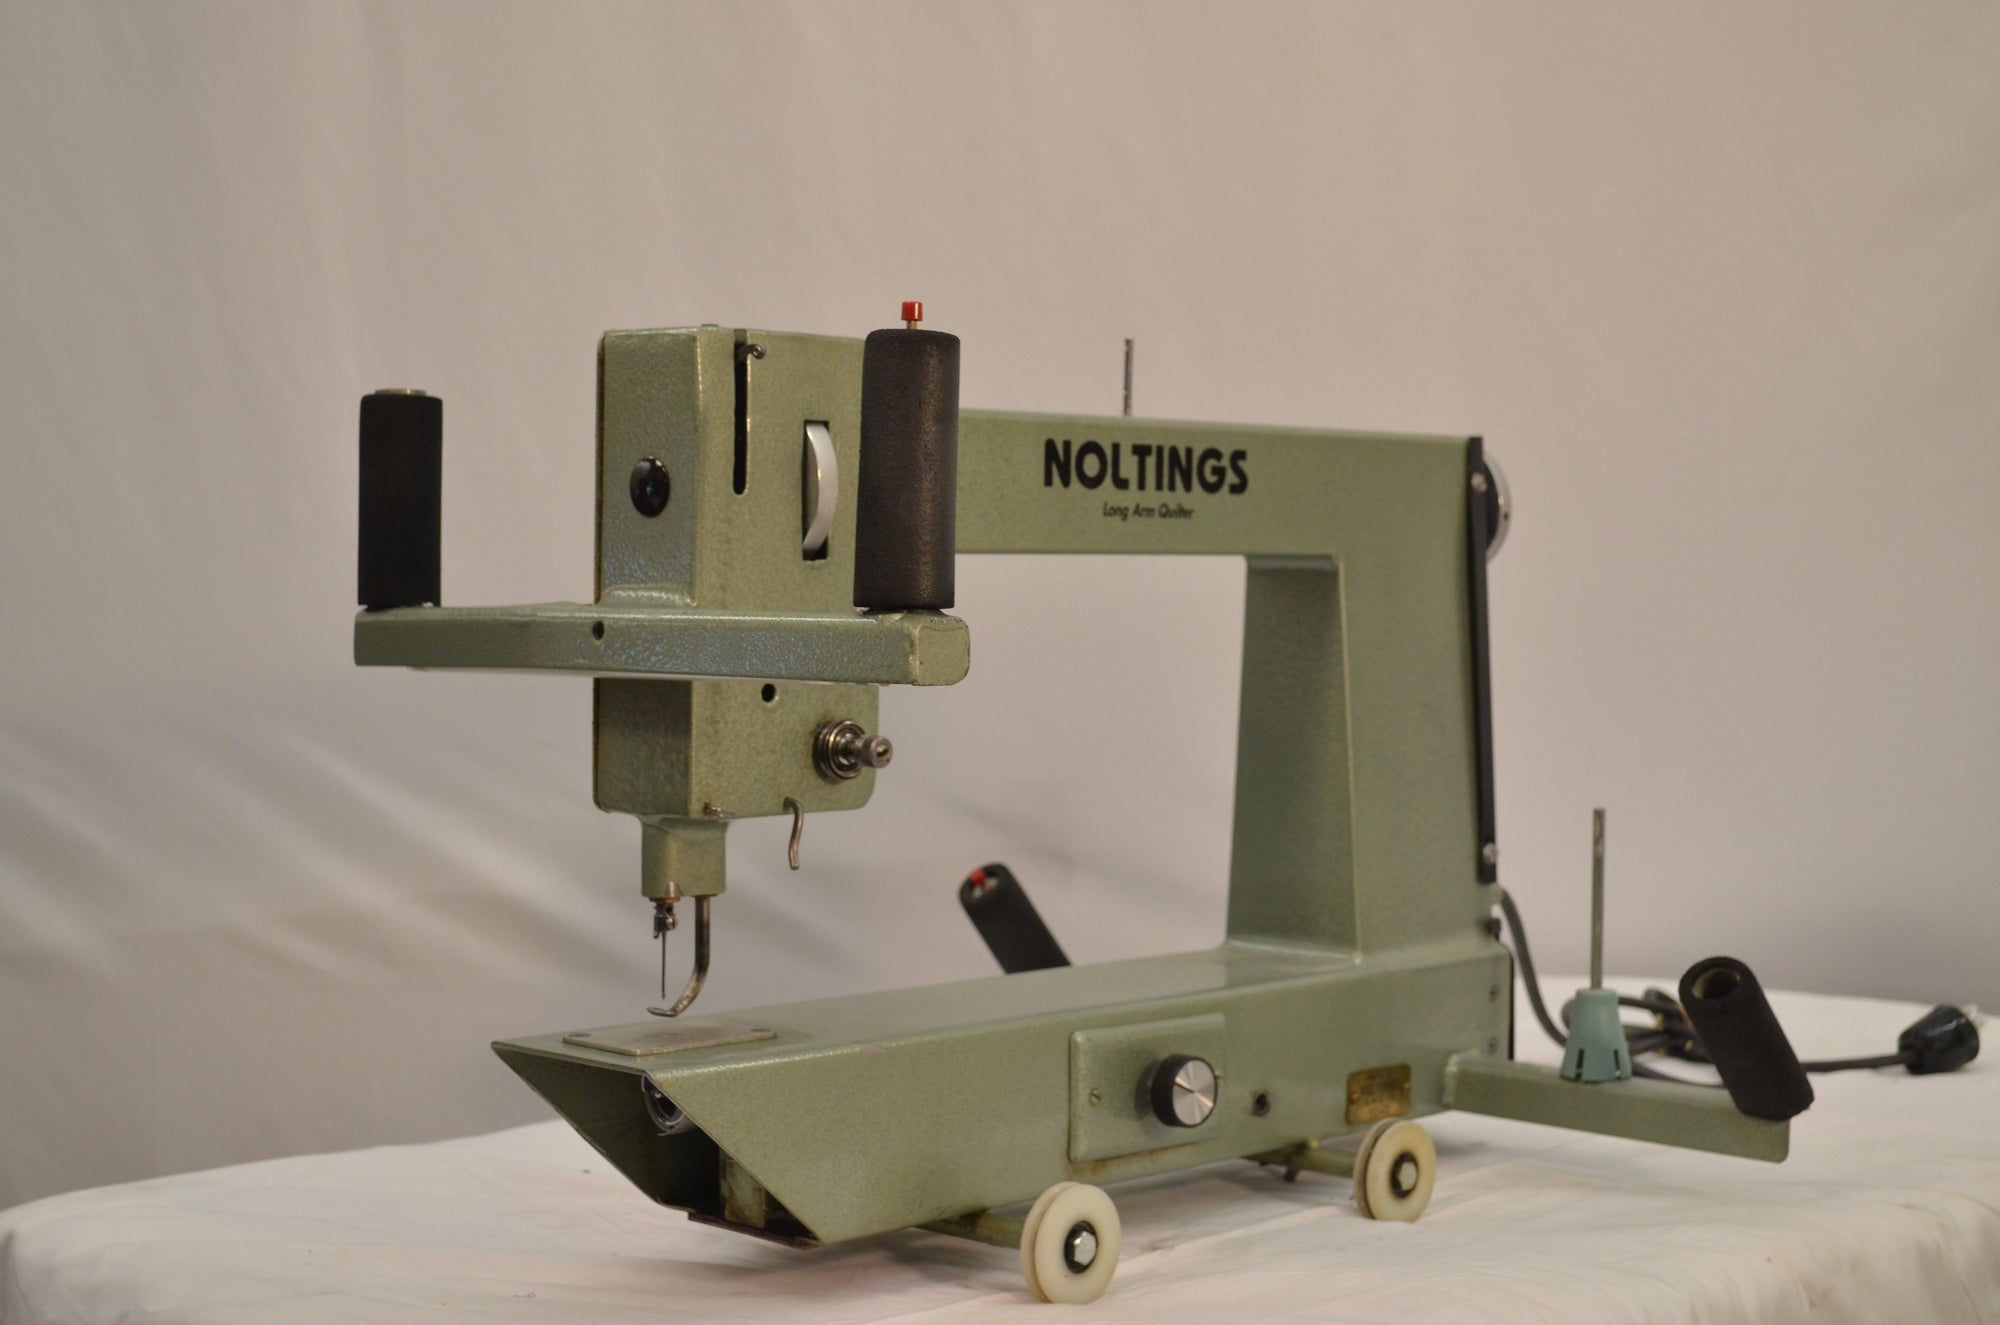 Quilters Ruler Mini 4-in-1 - Nolting Longarm Quilting Machines